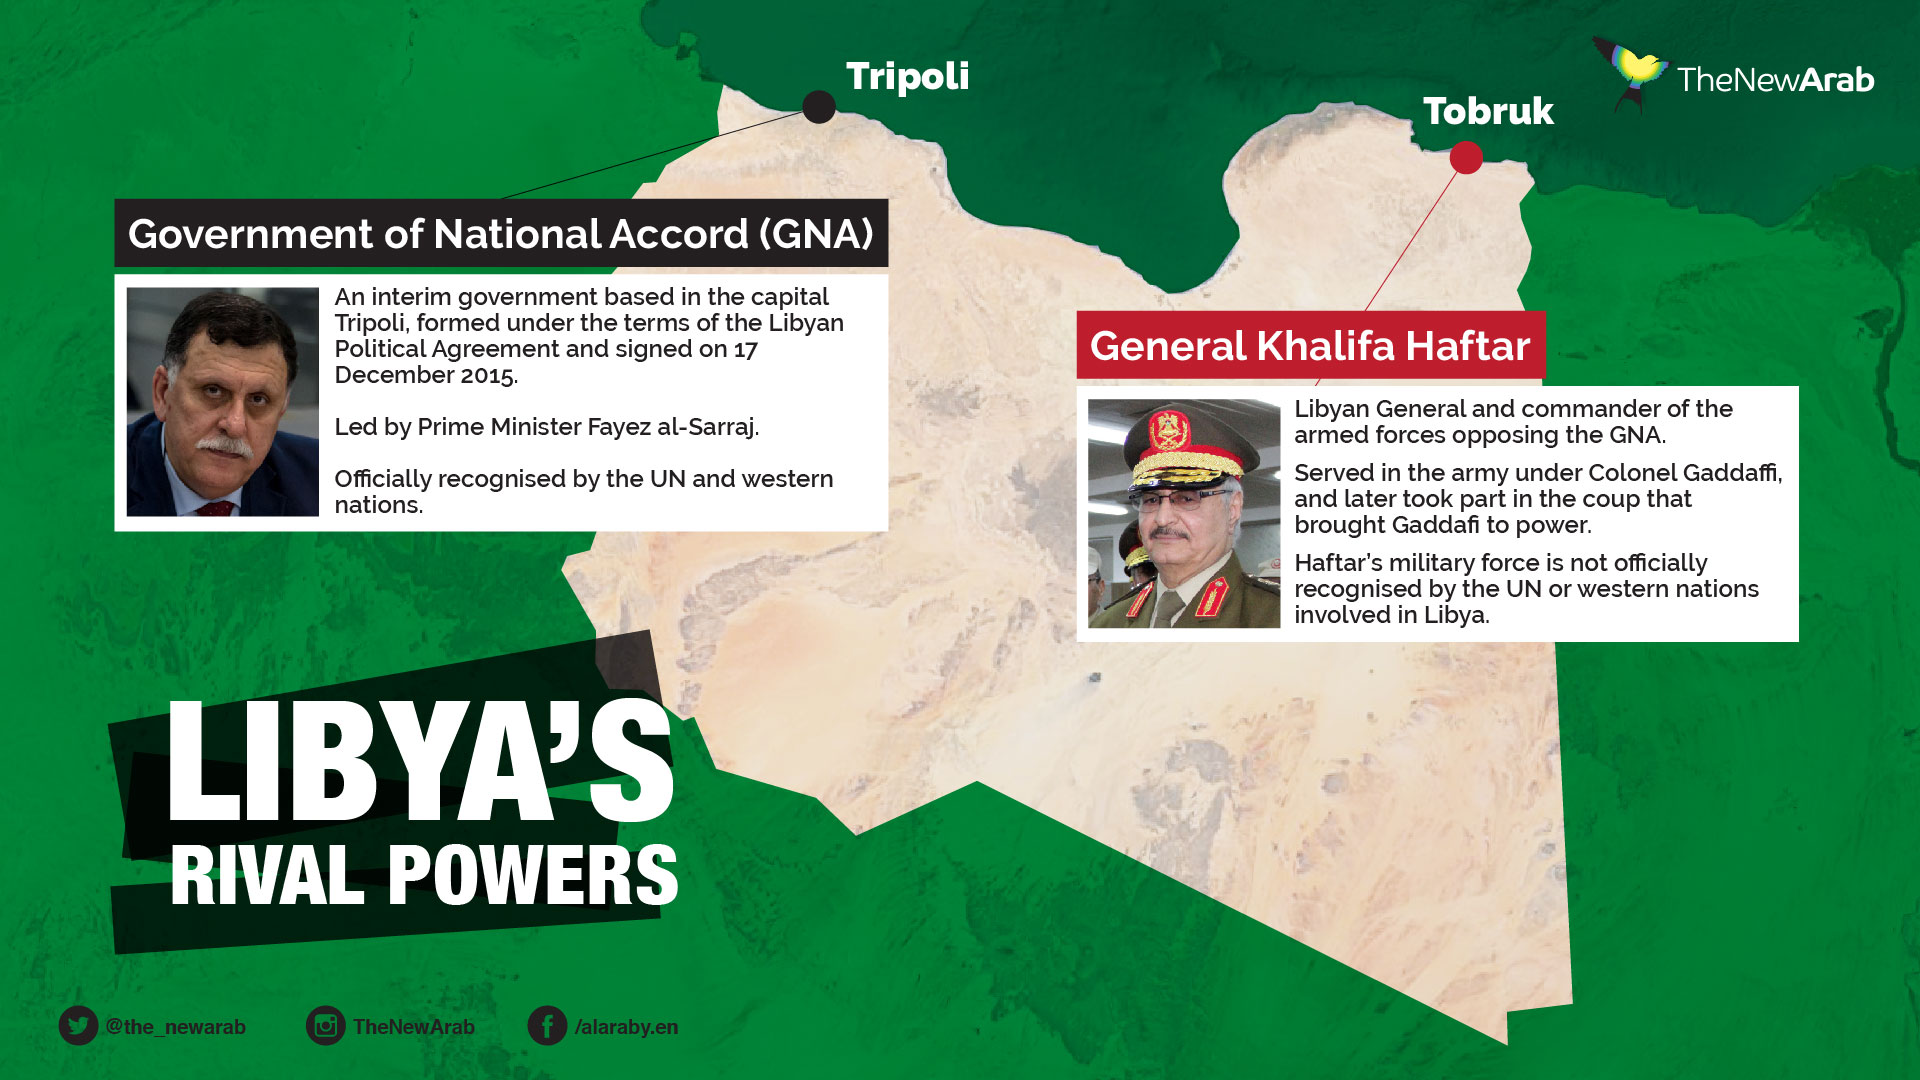 libya-rival powers v2-01.jpg